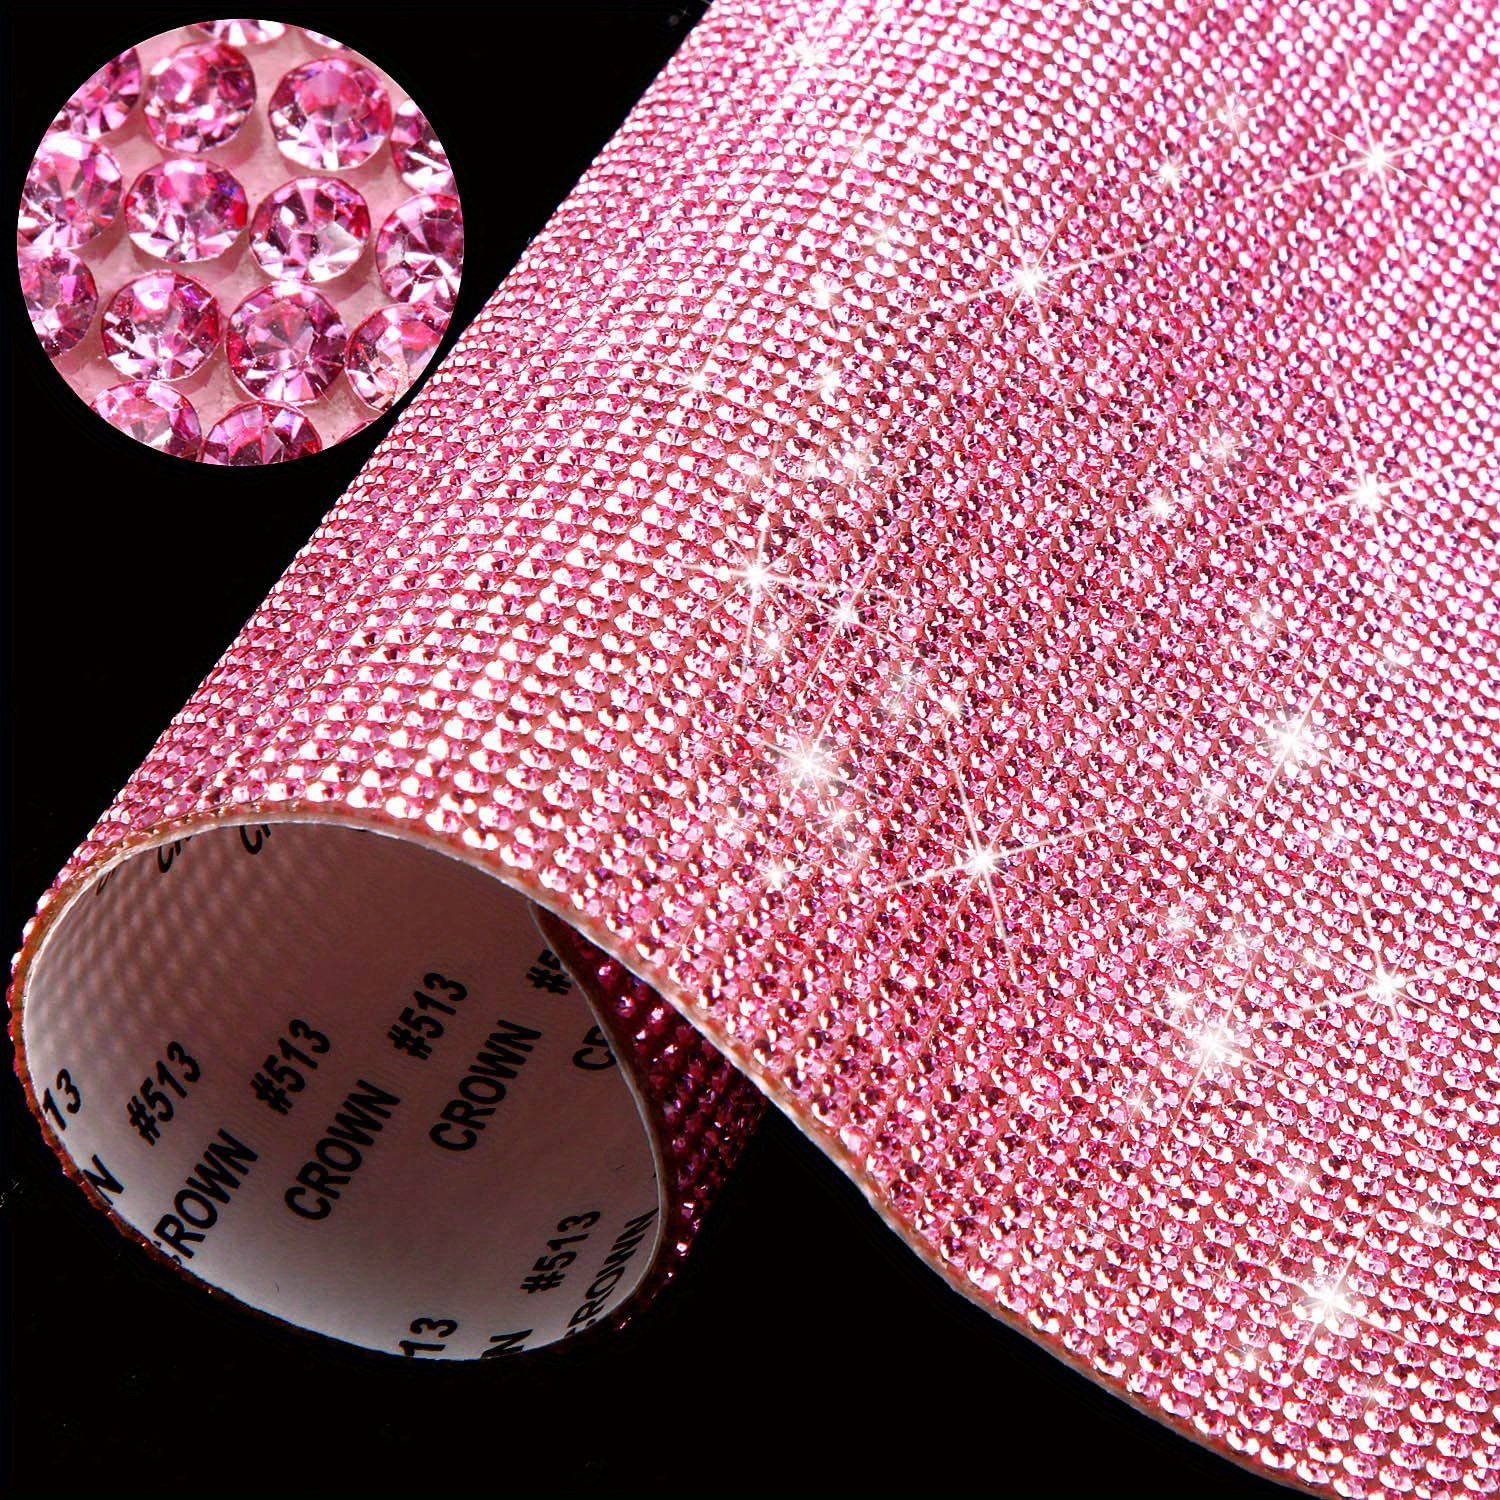 Pink Diamond, shiny rhinestone, gem. Pink sparkle diamond, crystal